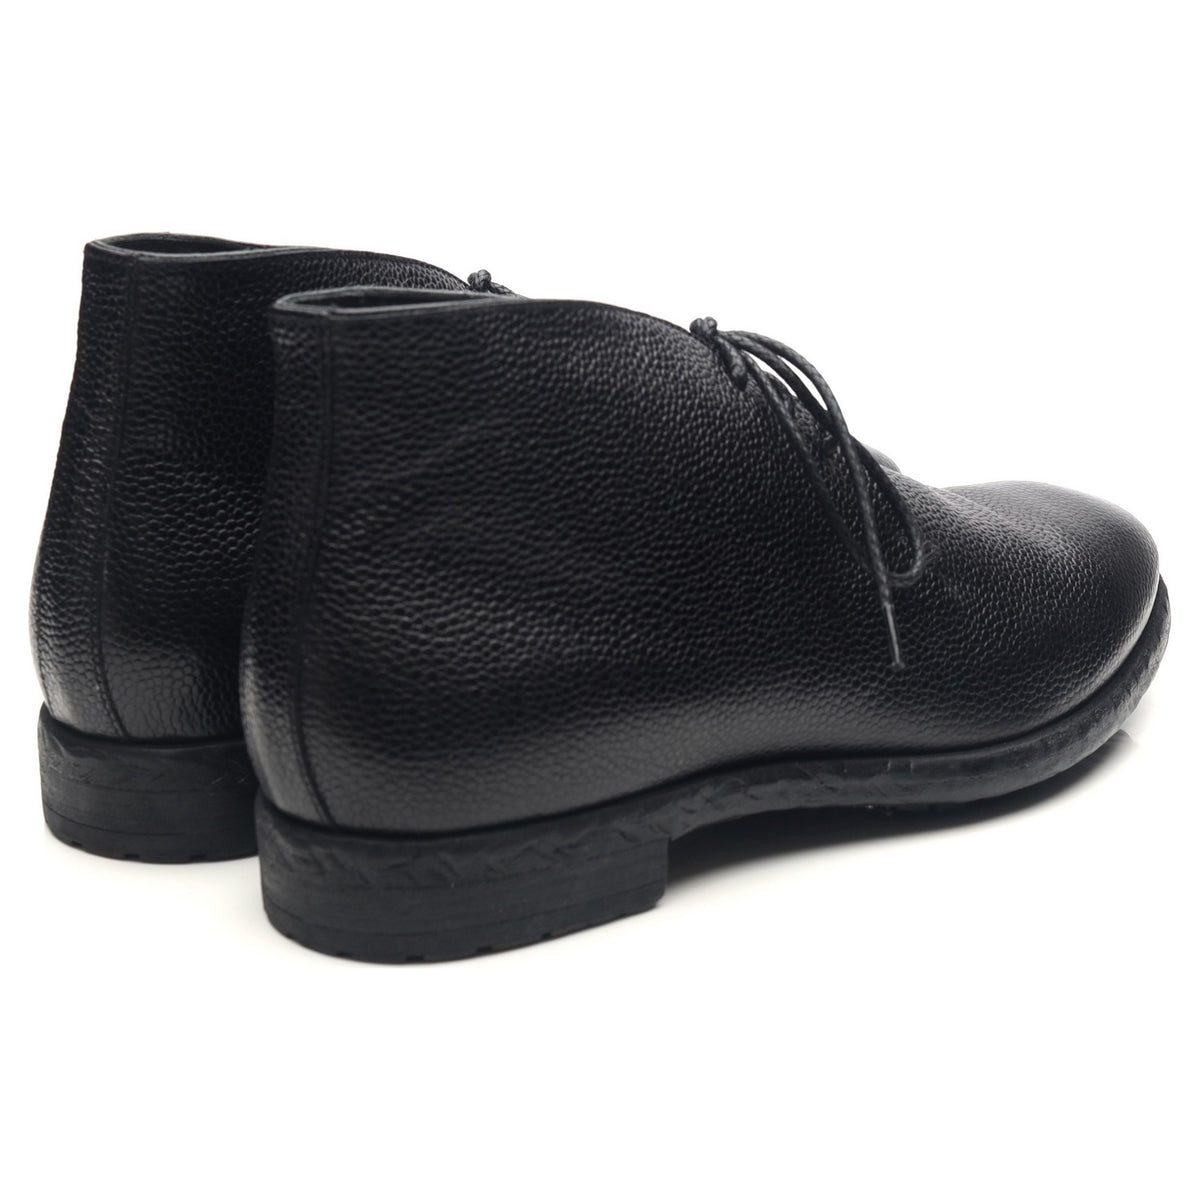 Black Leather Chukka Boots UK 6 EU 40